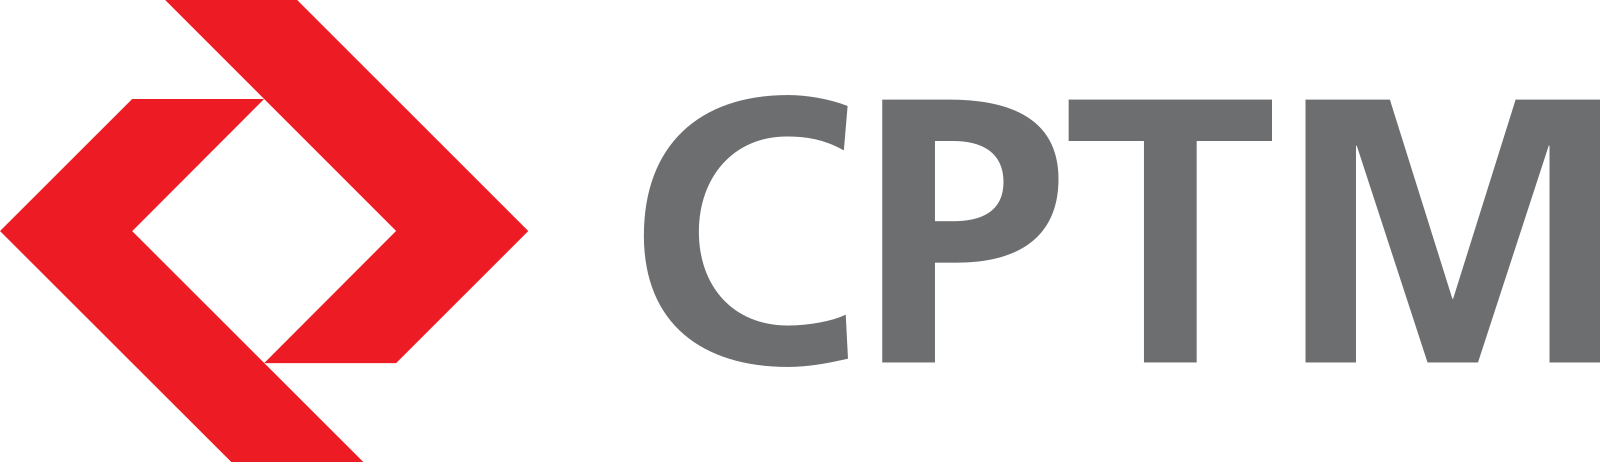 CPTM Logo.